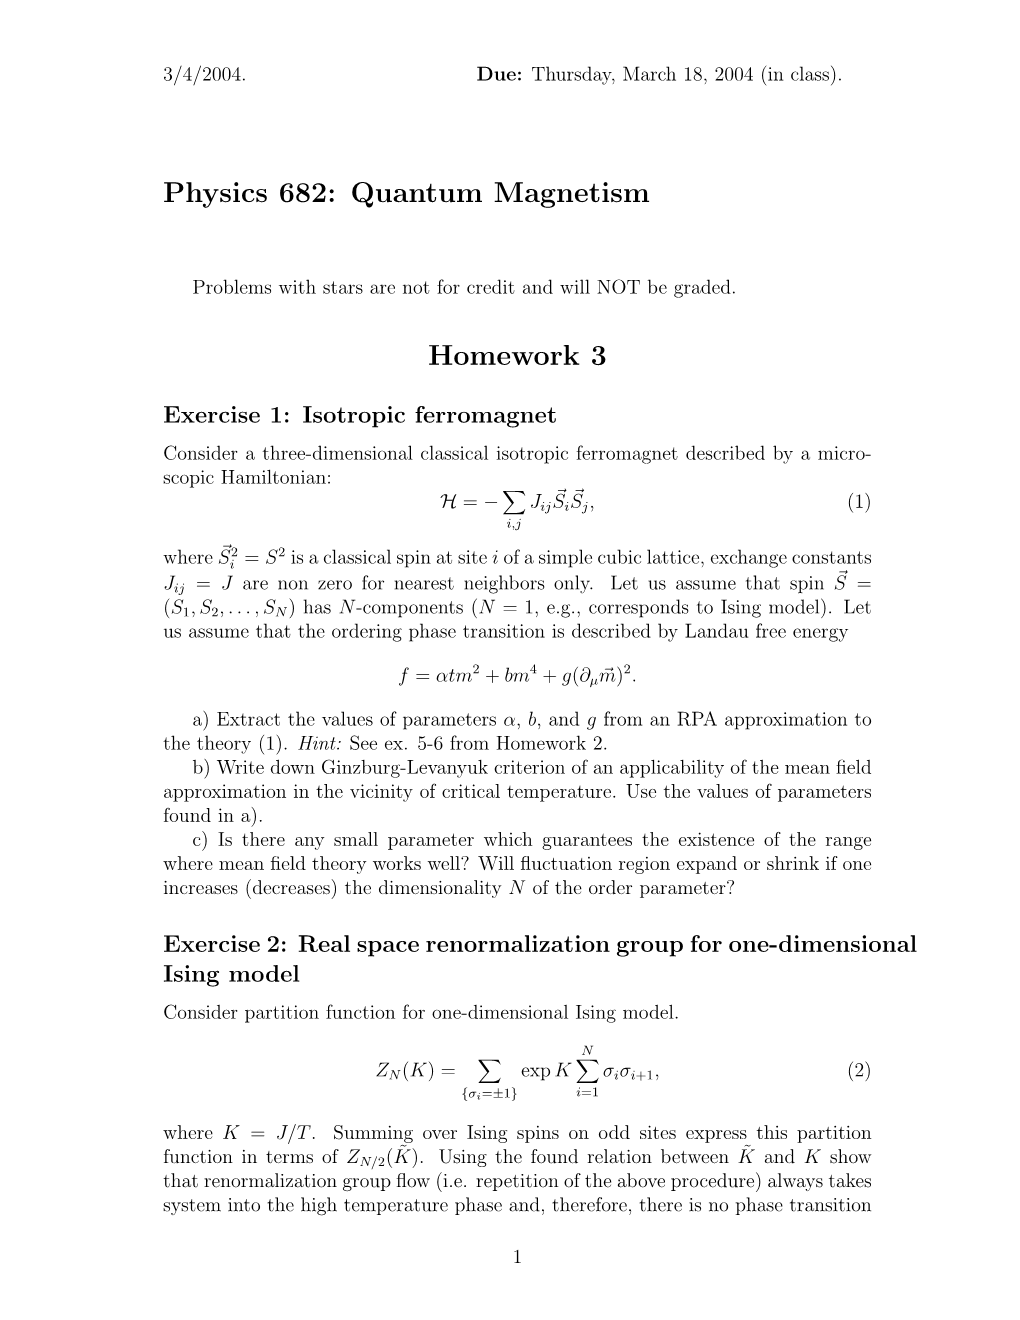 Physics 682: Quantum Magnetism Homework 3